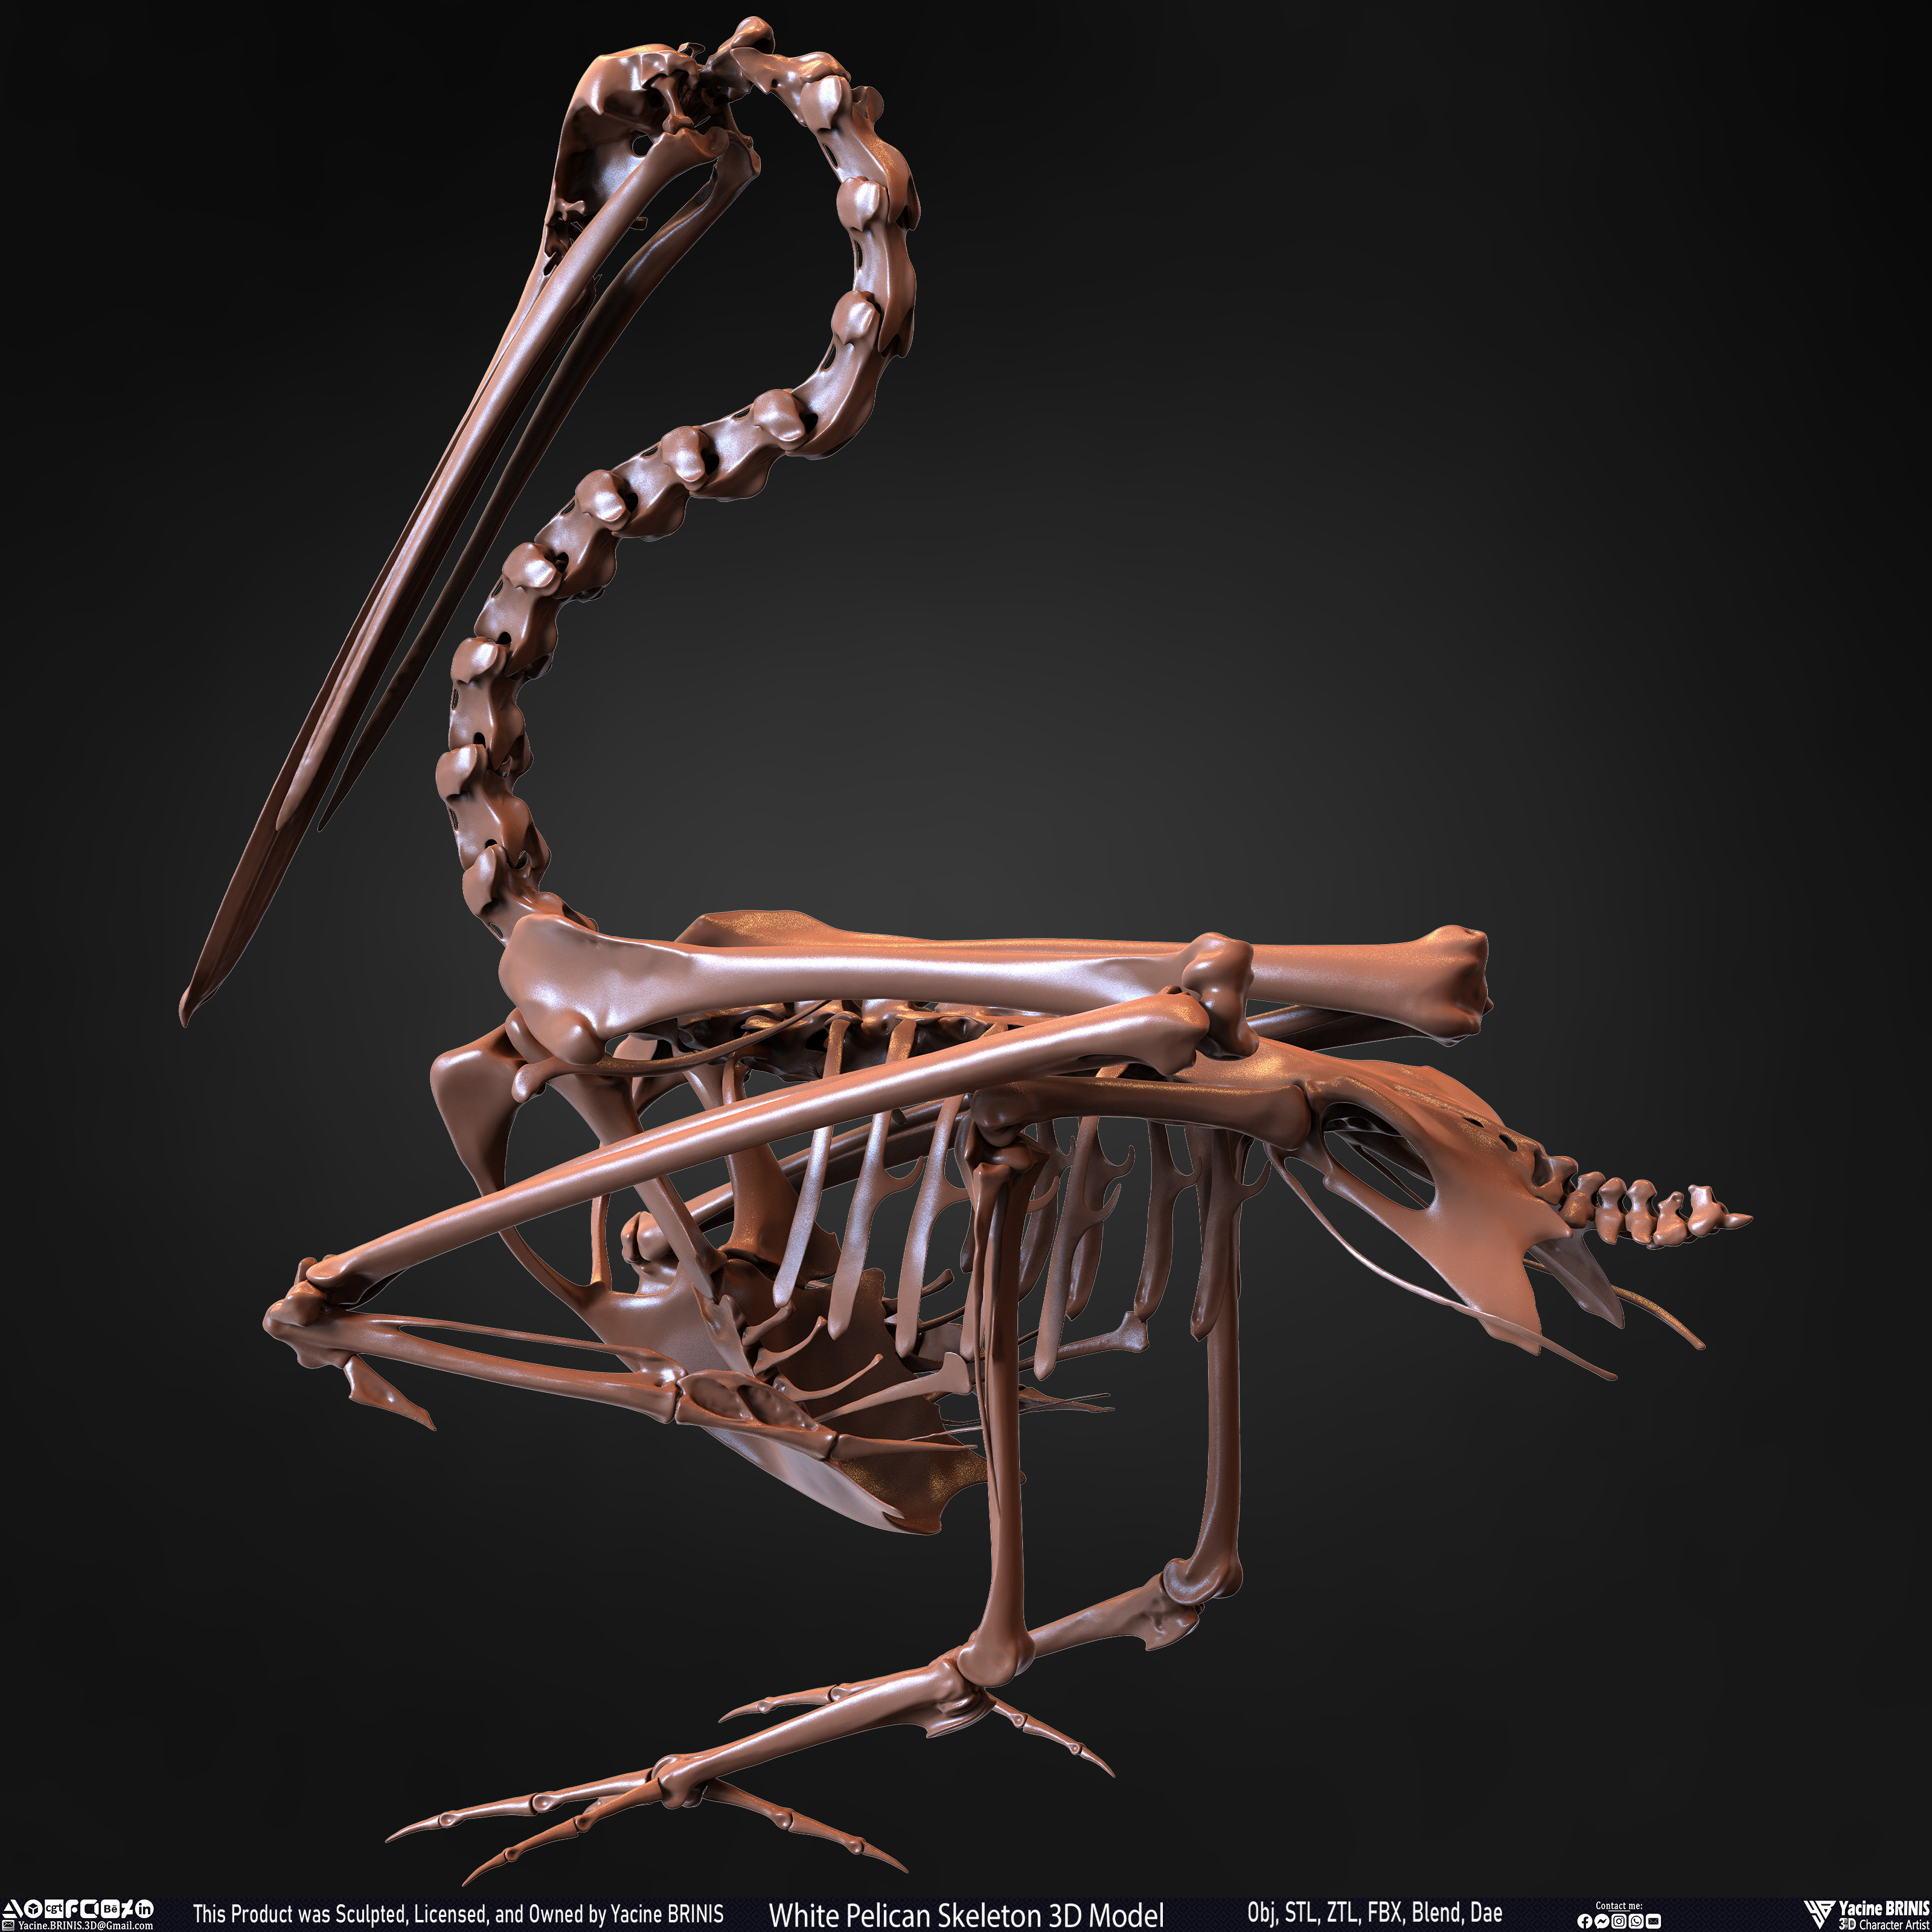 White Pelican Skeleton 3D Model Sculpted by Yacine BRINIS Set 014